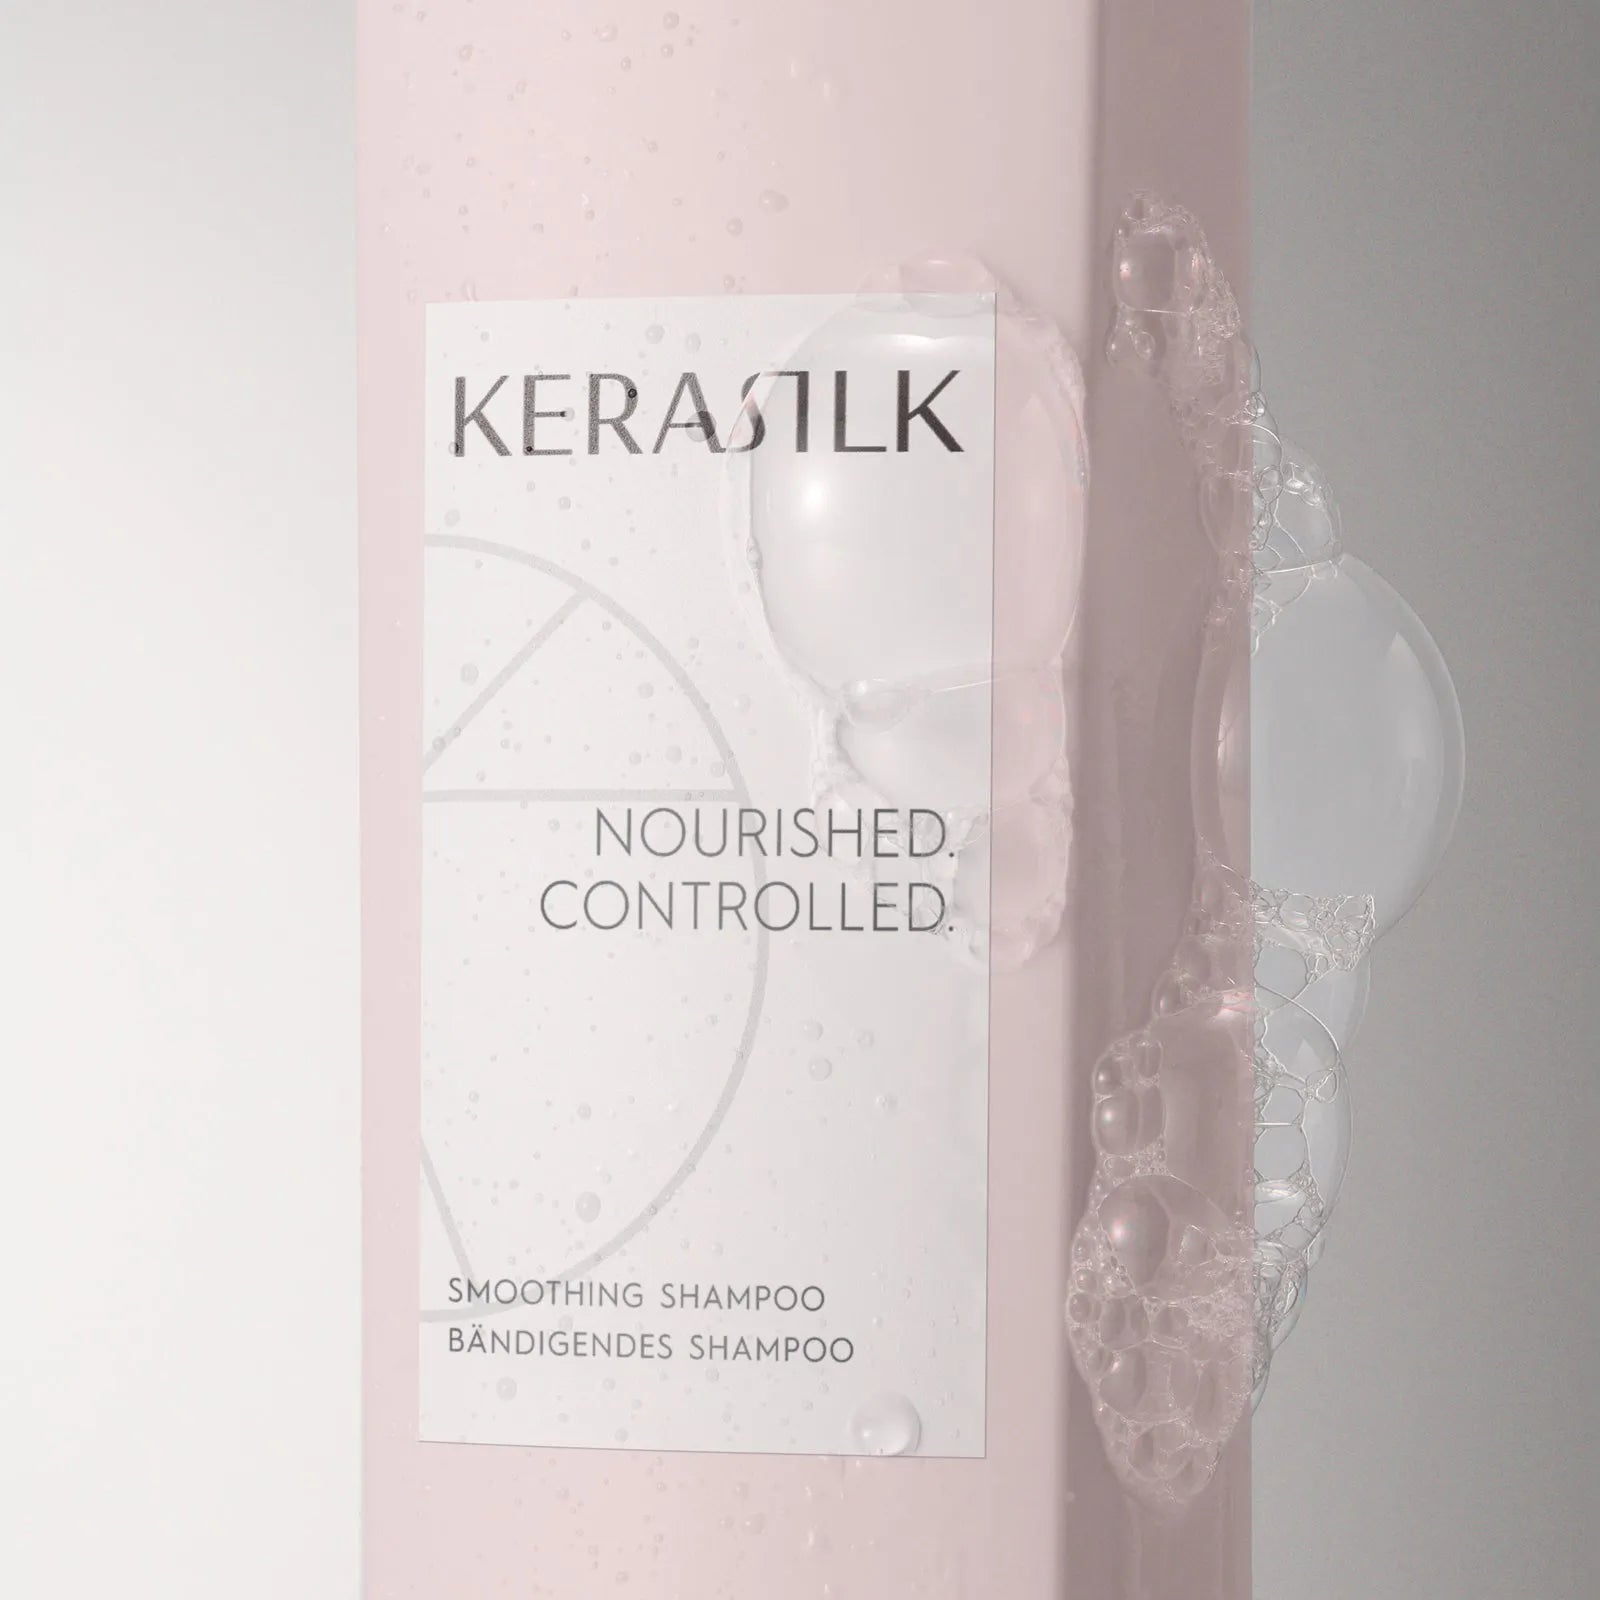 Kerasilk Smoothing Shampoo 250ml - shelley and co